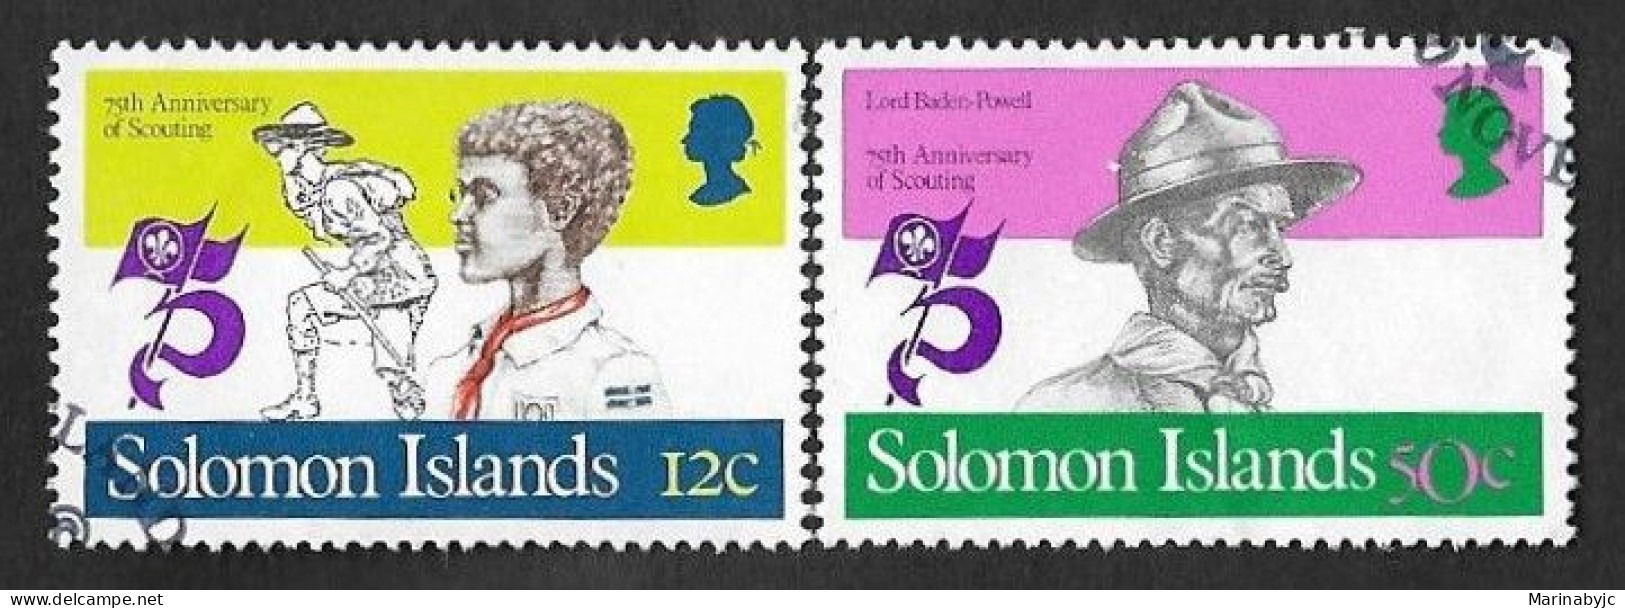 SD)1982 SOLOMON ISLANDS SHORT SERIES 75TH ANNIVERSARY OF SCOUTING, BOY IN BRIGADE AND BADEN POWELL, 2 USED STAMPS - Salomoninseln (Salomonen 1978-...)